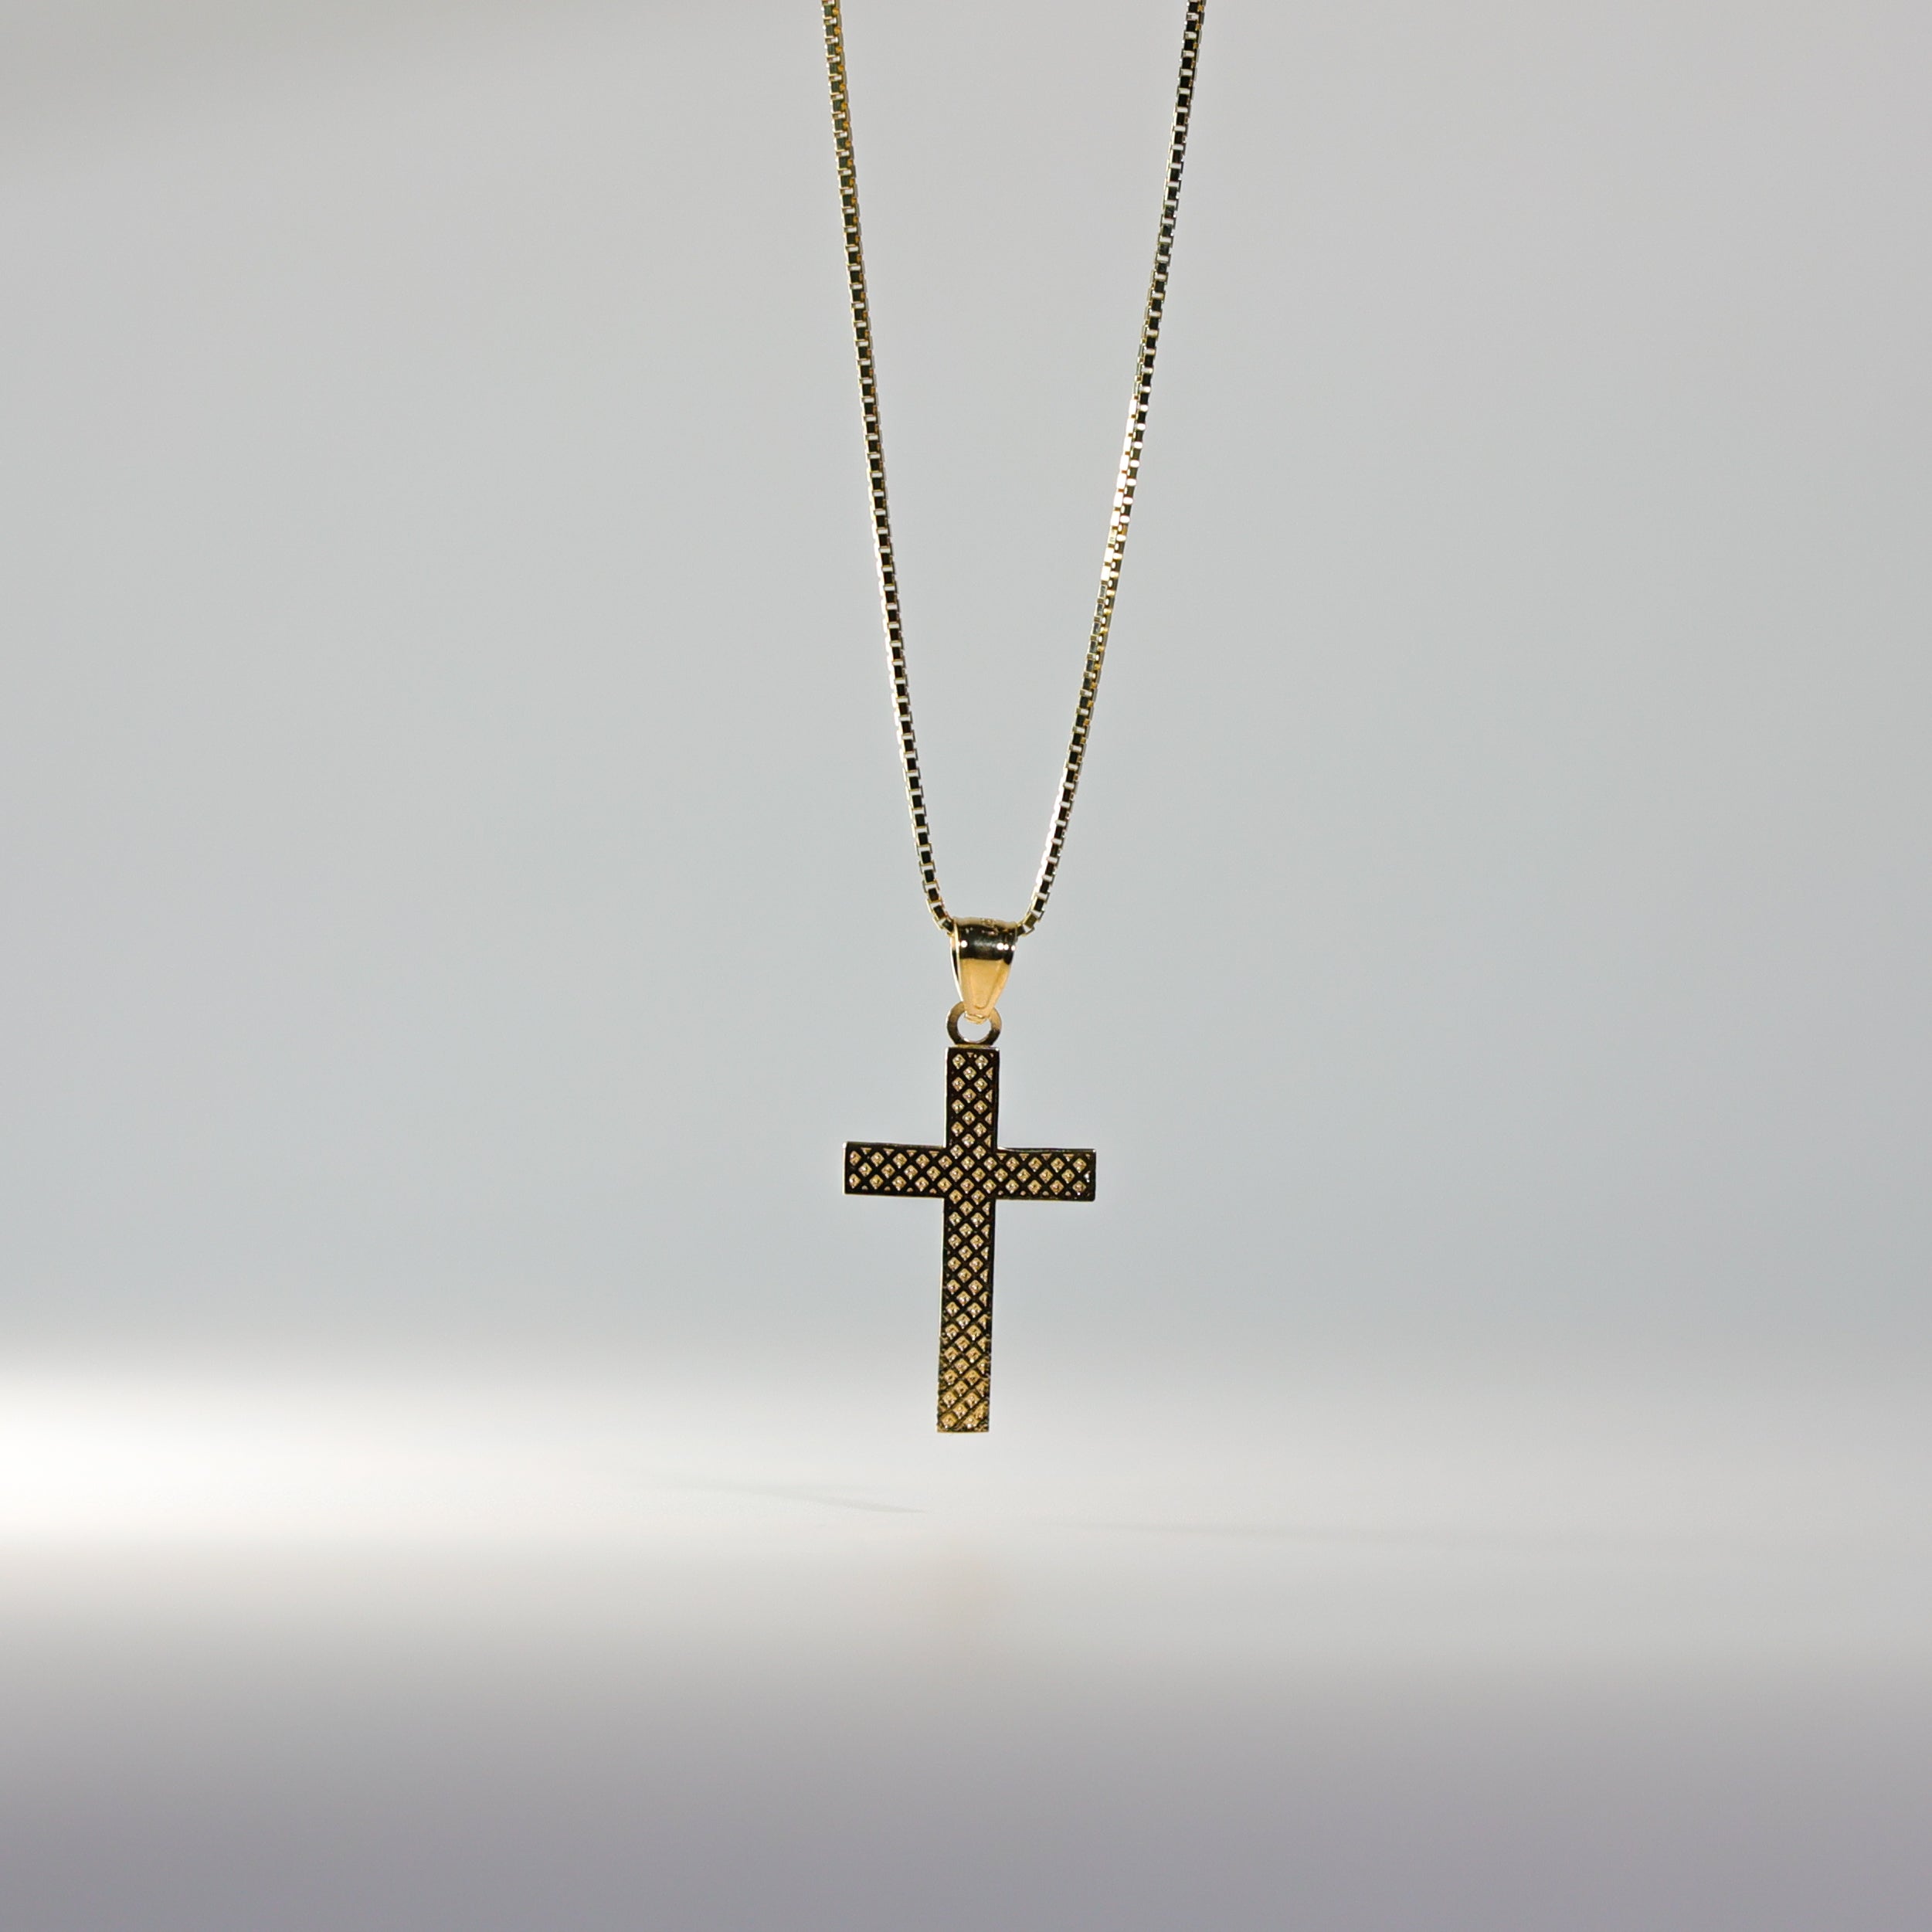 Gold Cross Pendant Model-0135 - Charlie & Co. Jewelry